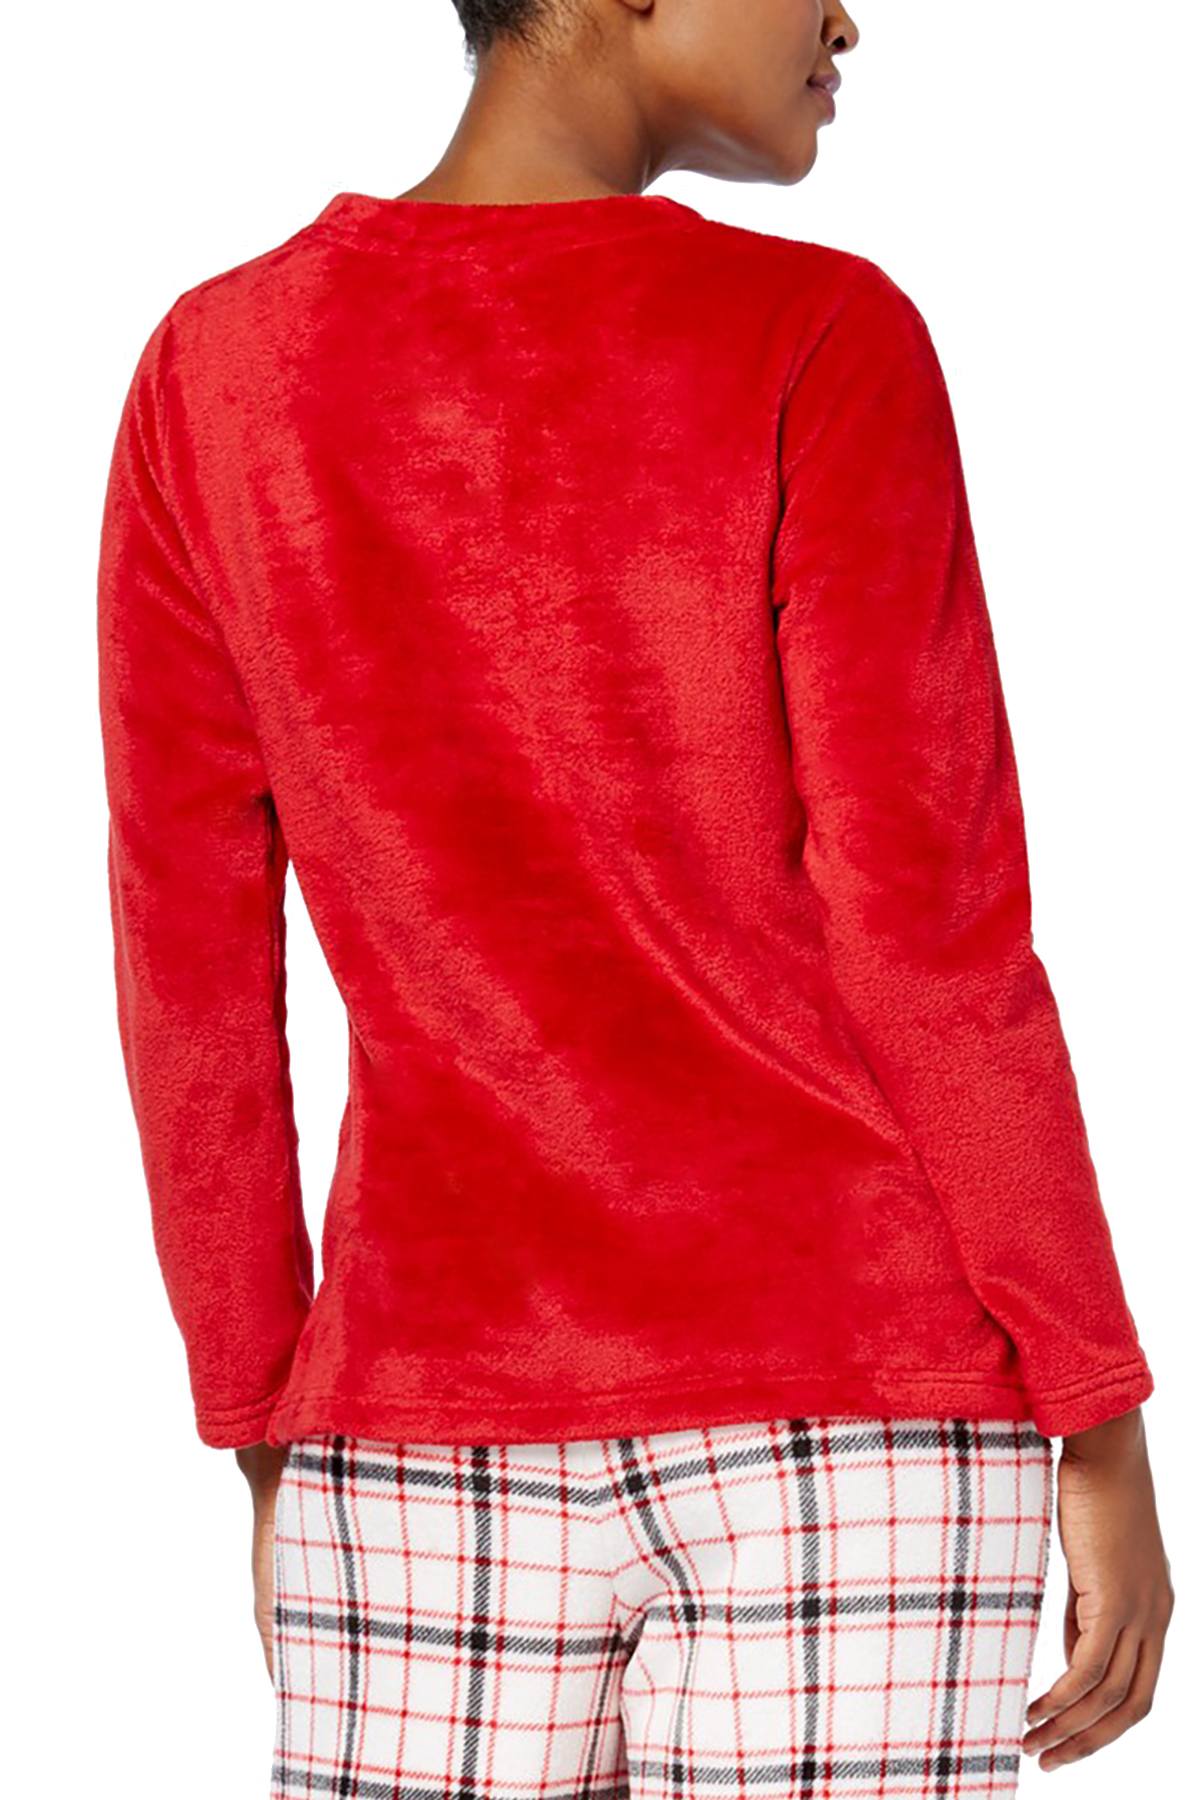 Charter Club Intimates Red/Grid-Plaid Plush Applique Pajama Top